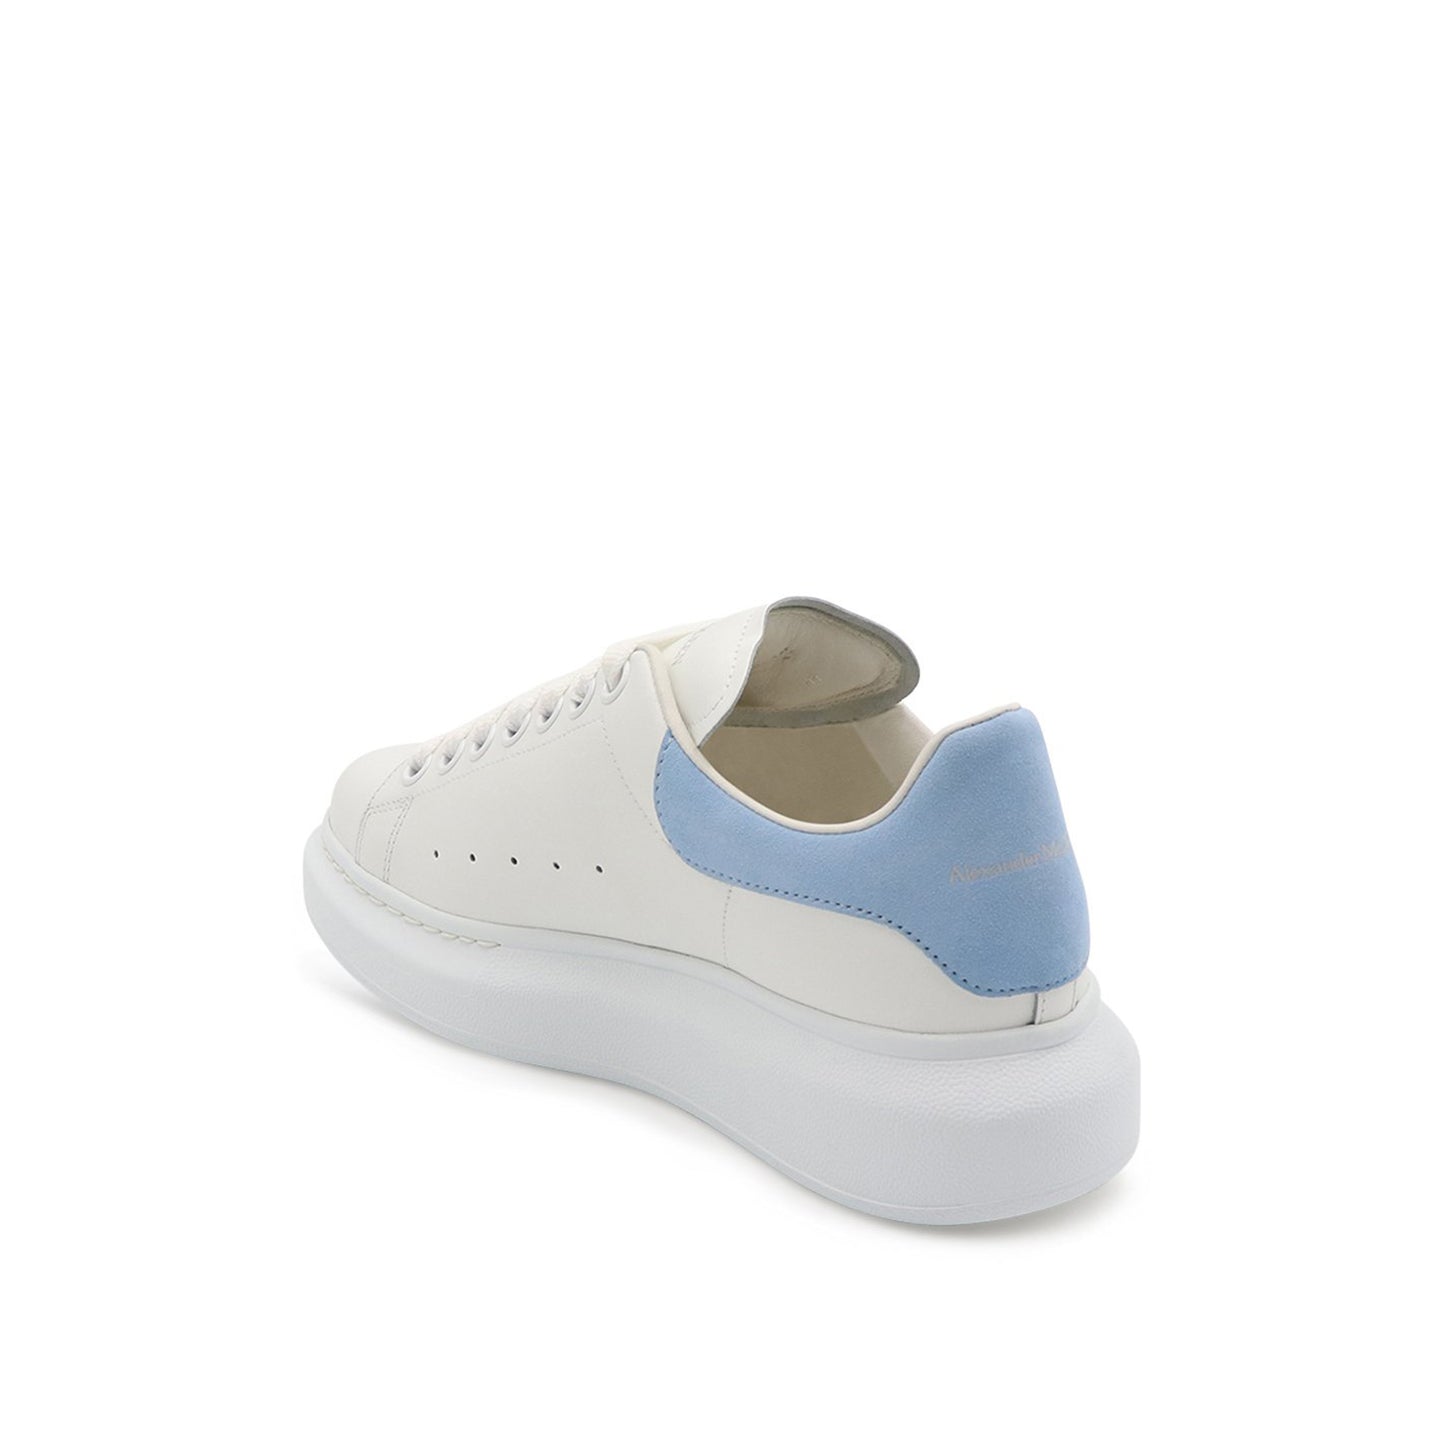 Larry Oversized Sneaker in White/Powder Blue